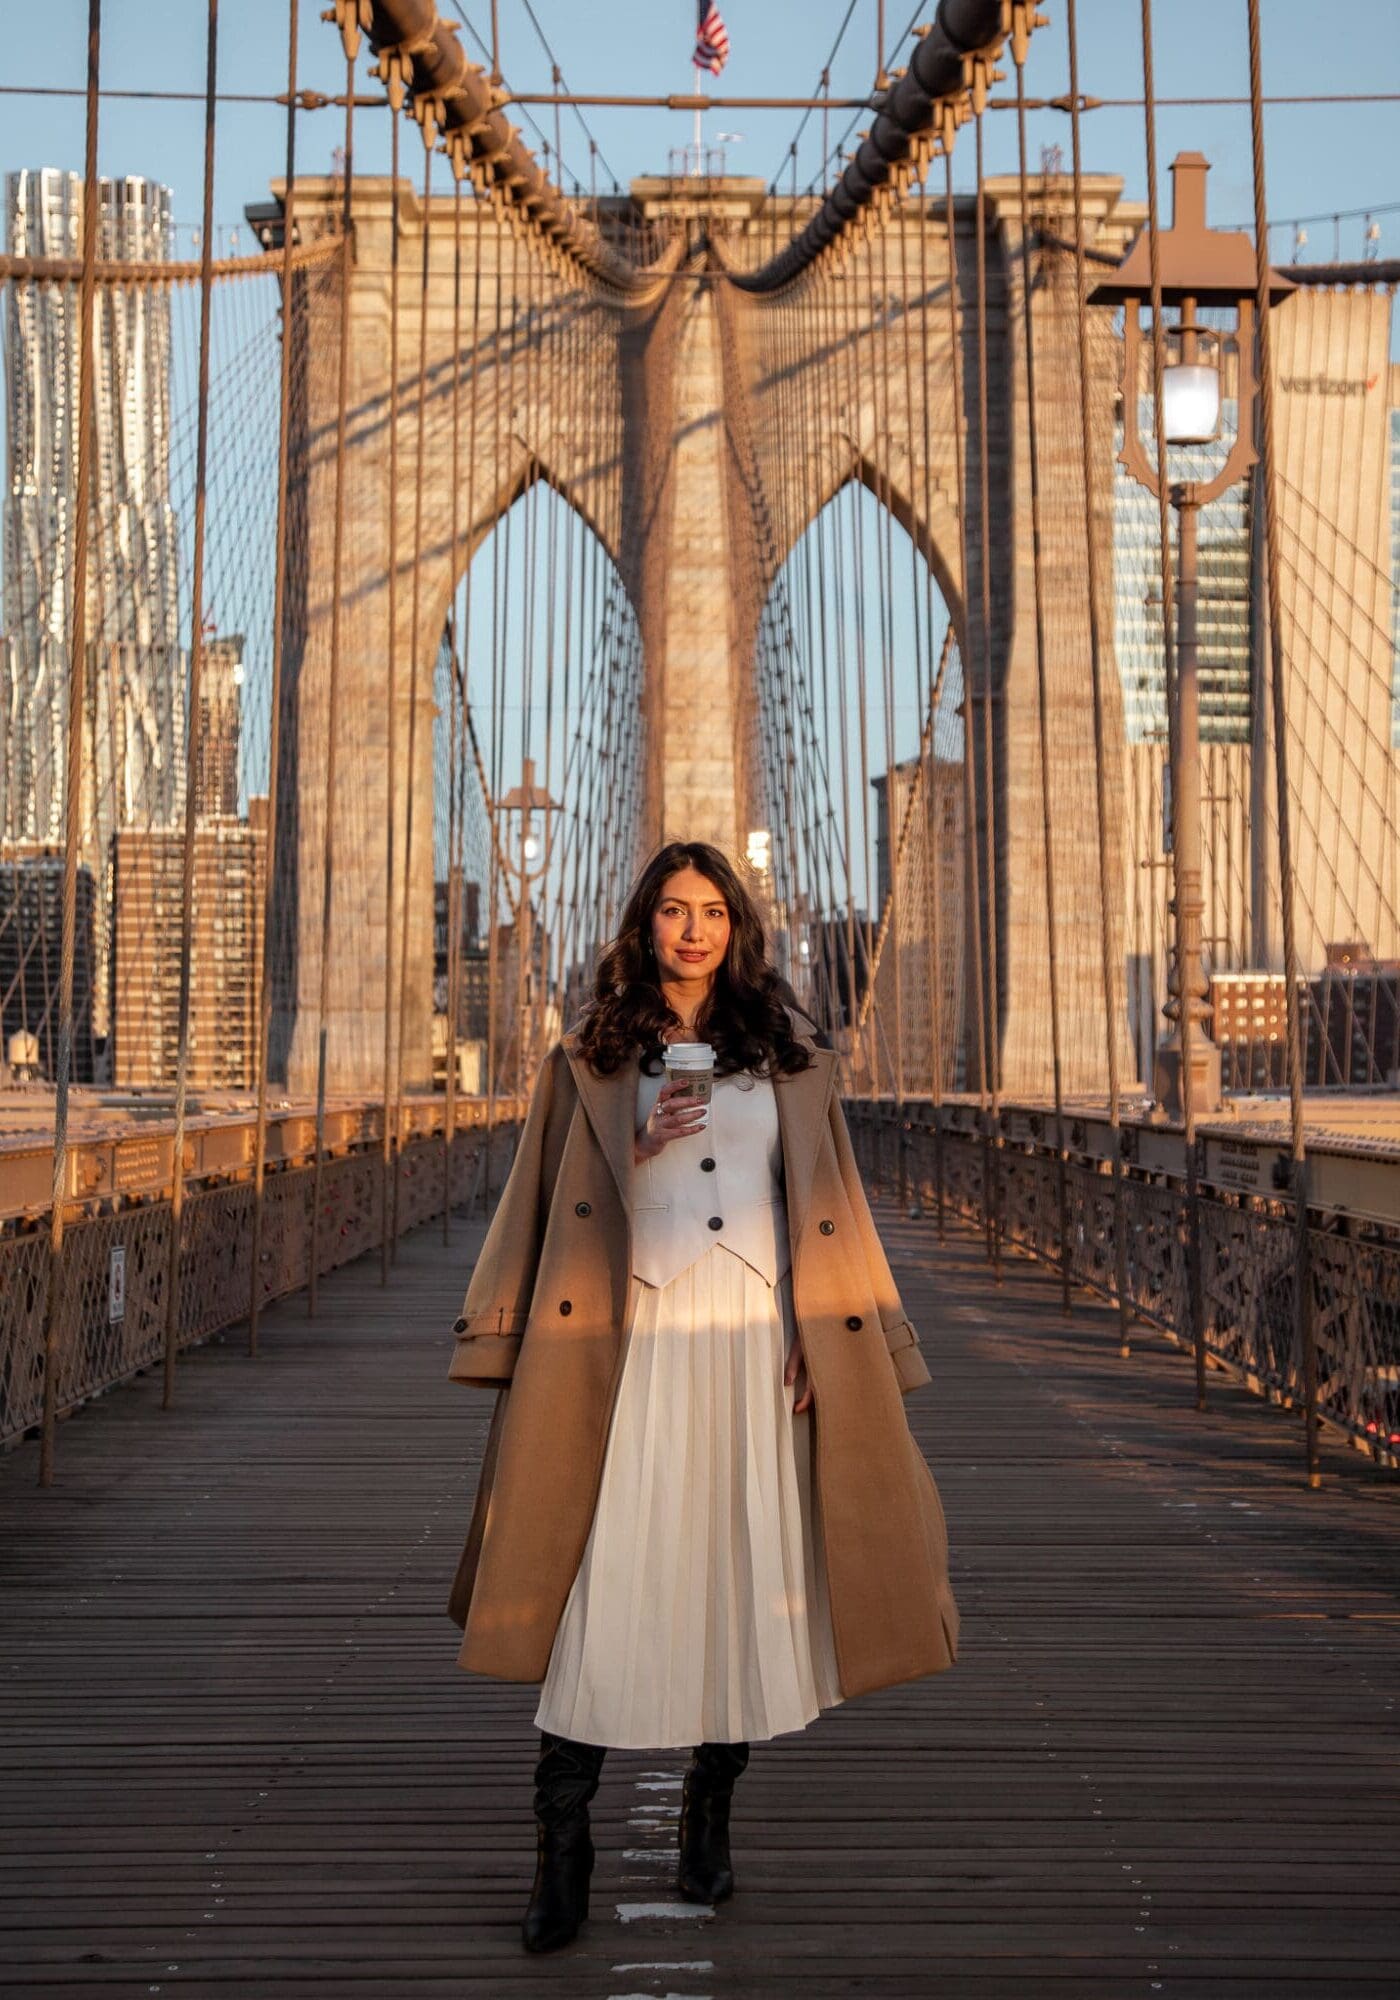 Brooklyn Bridge New York Instagram Locations